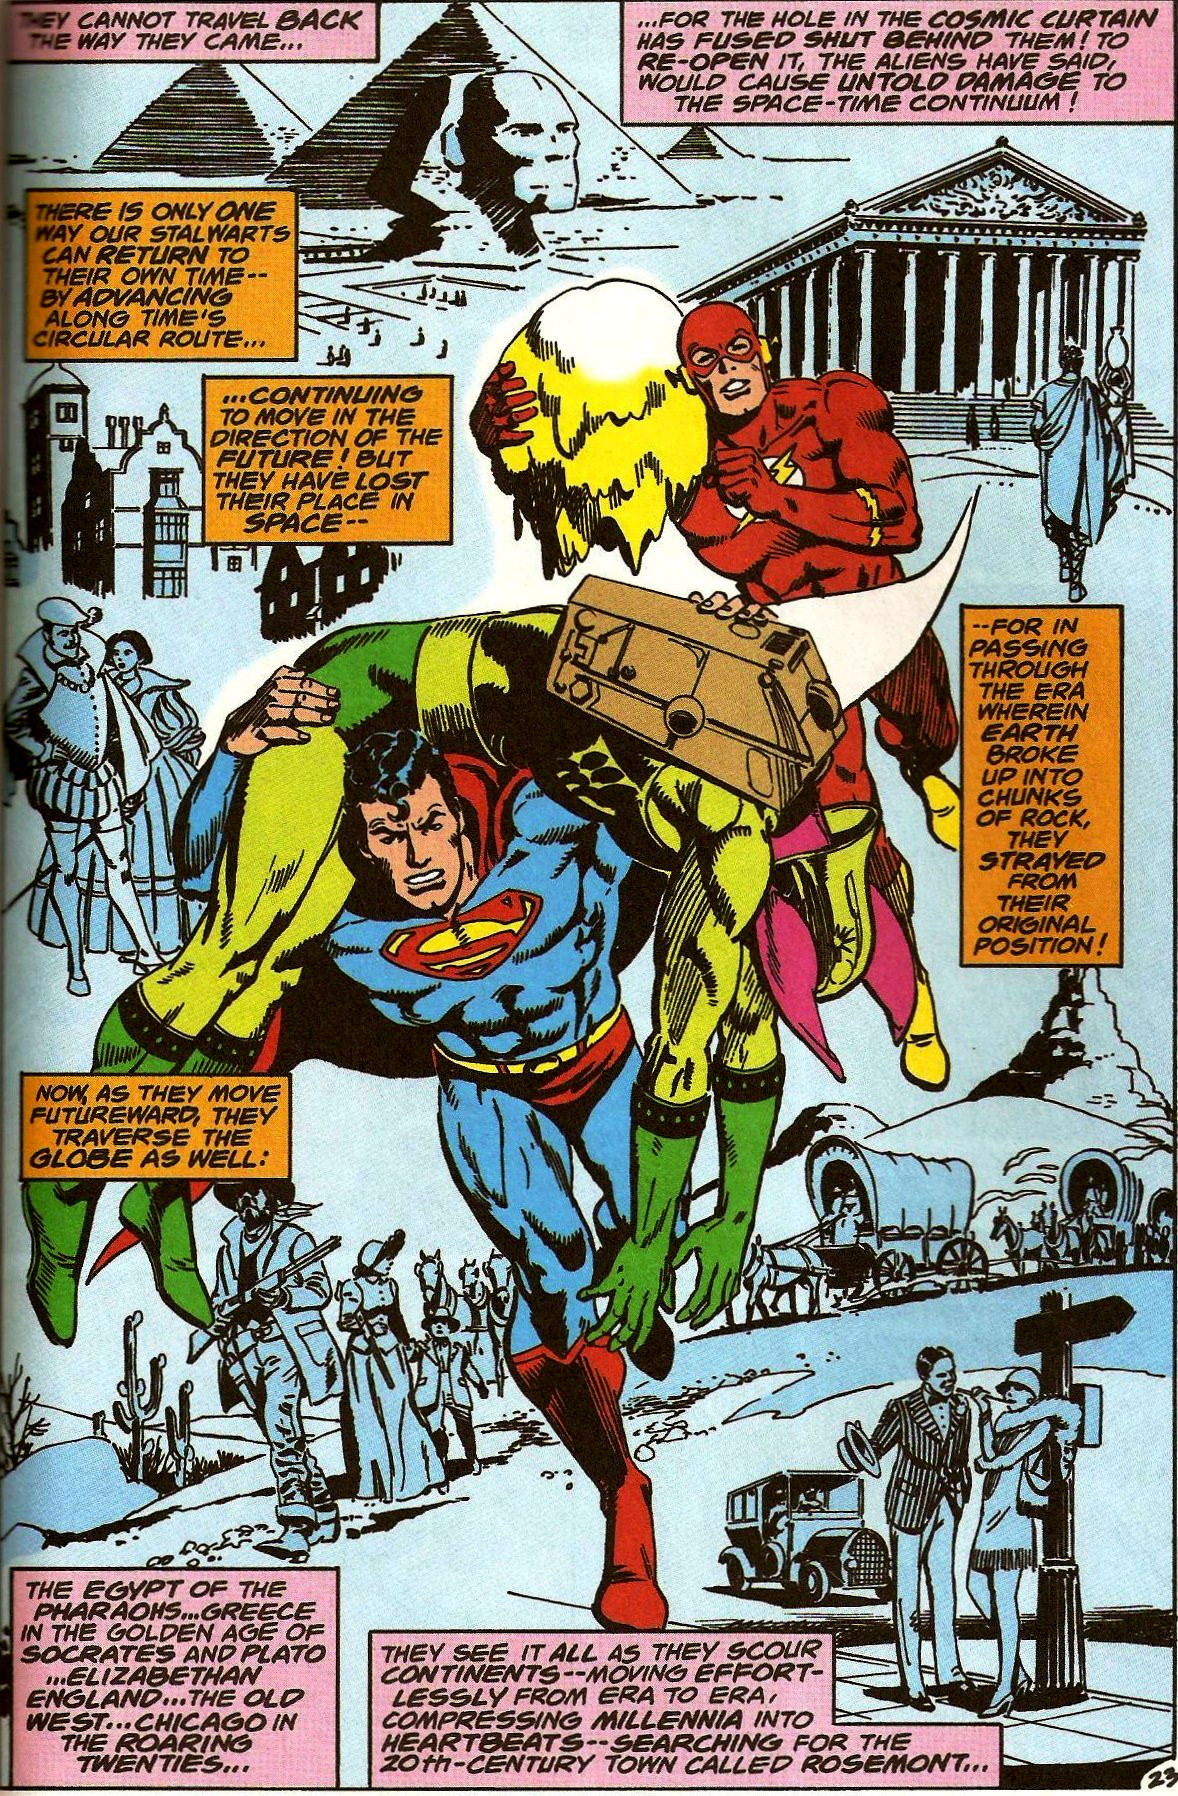 From DC Comics Presents #2 (1978)